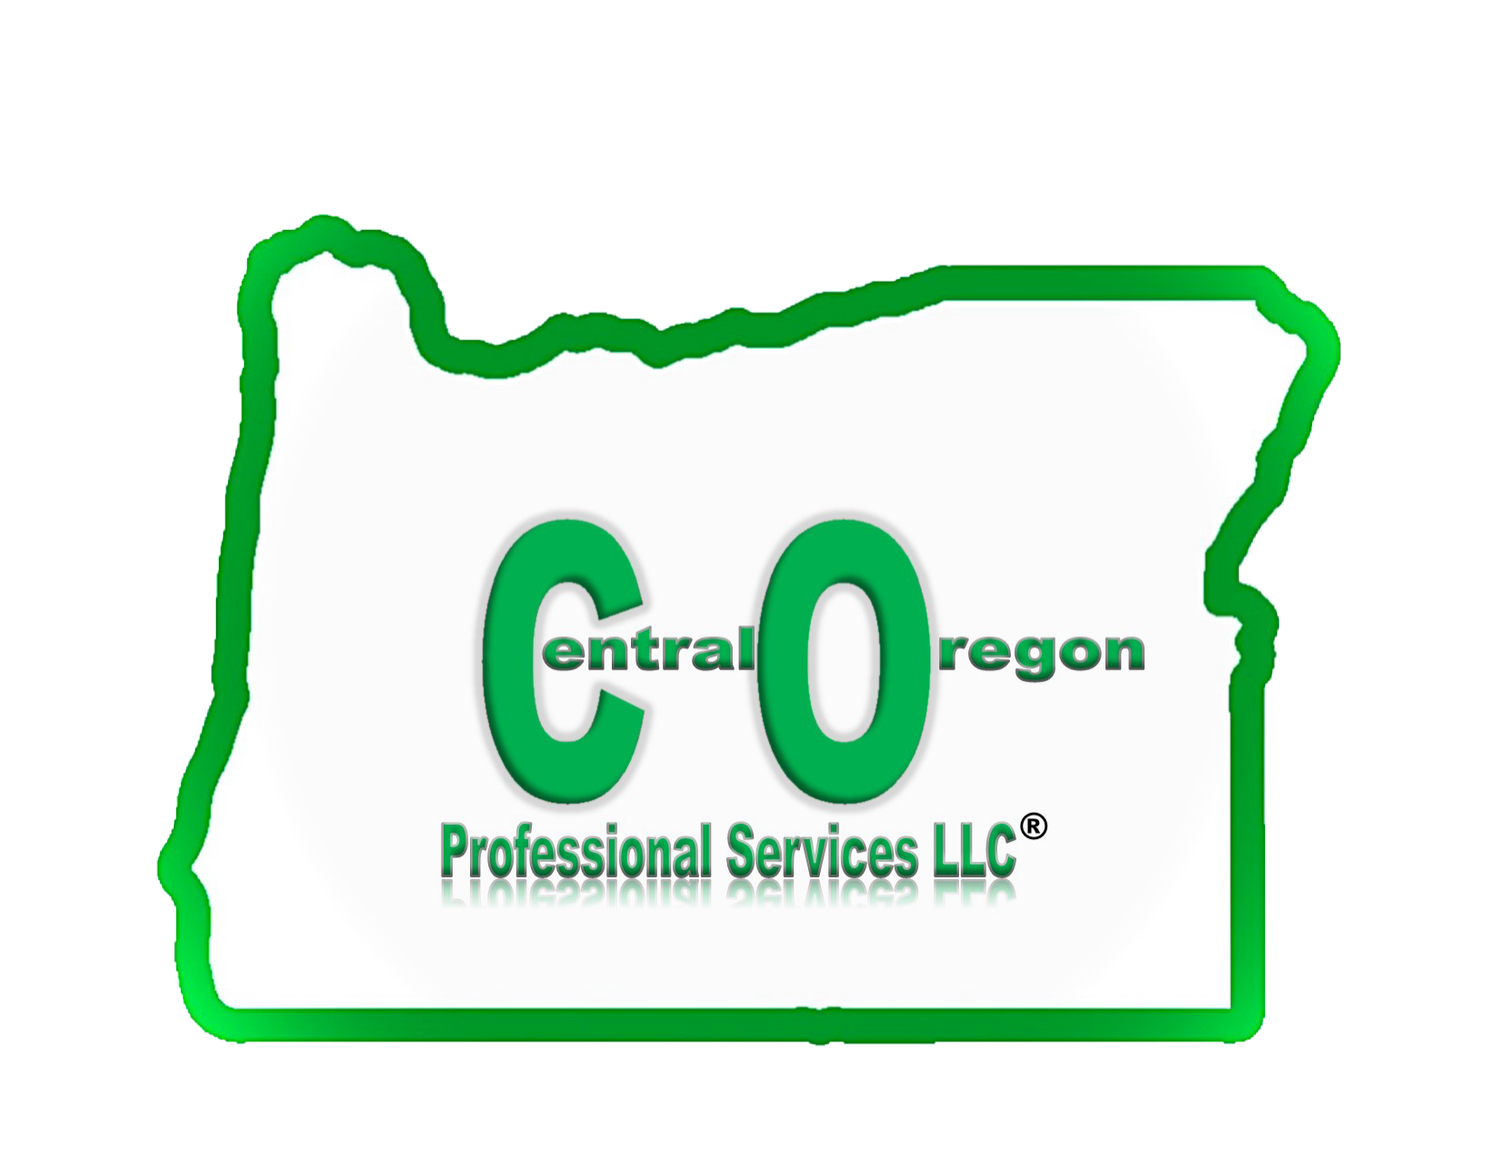 Central Oregon Professional Services